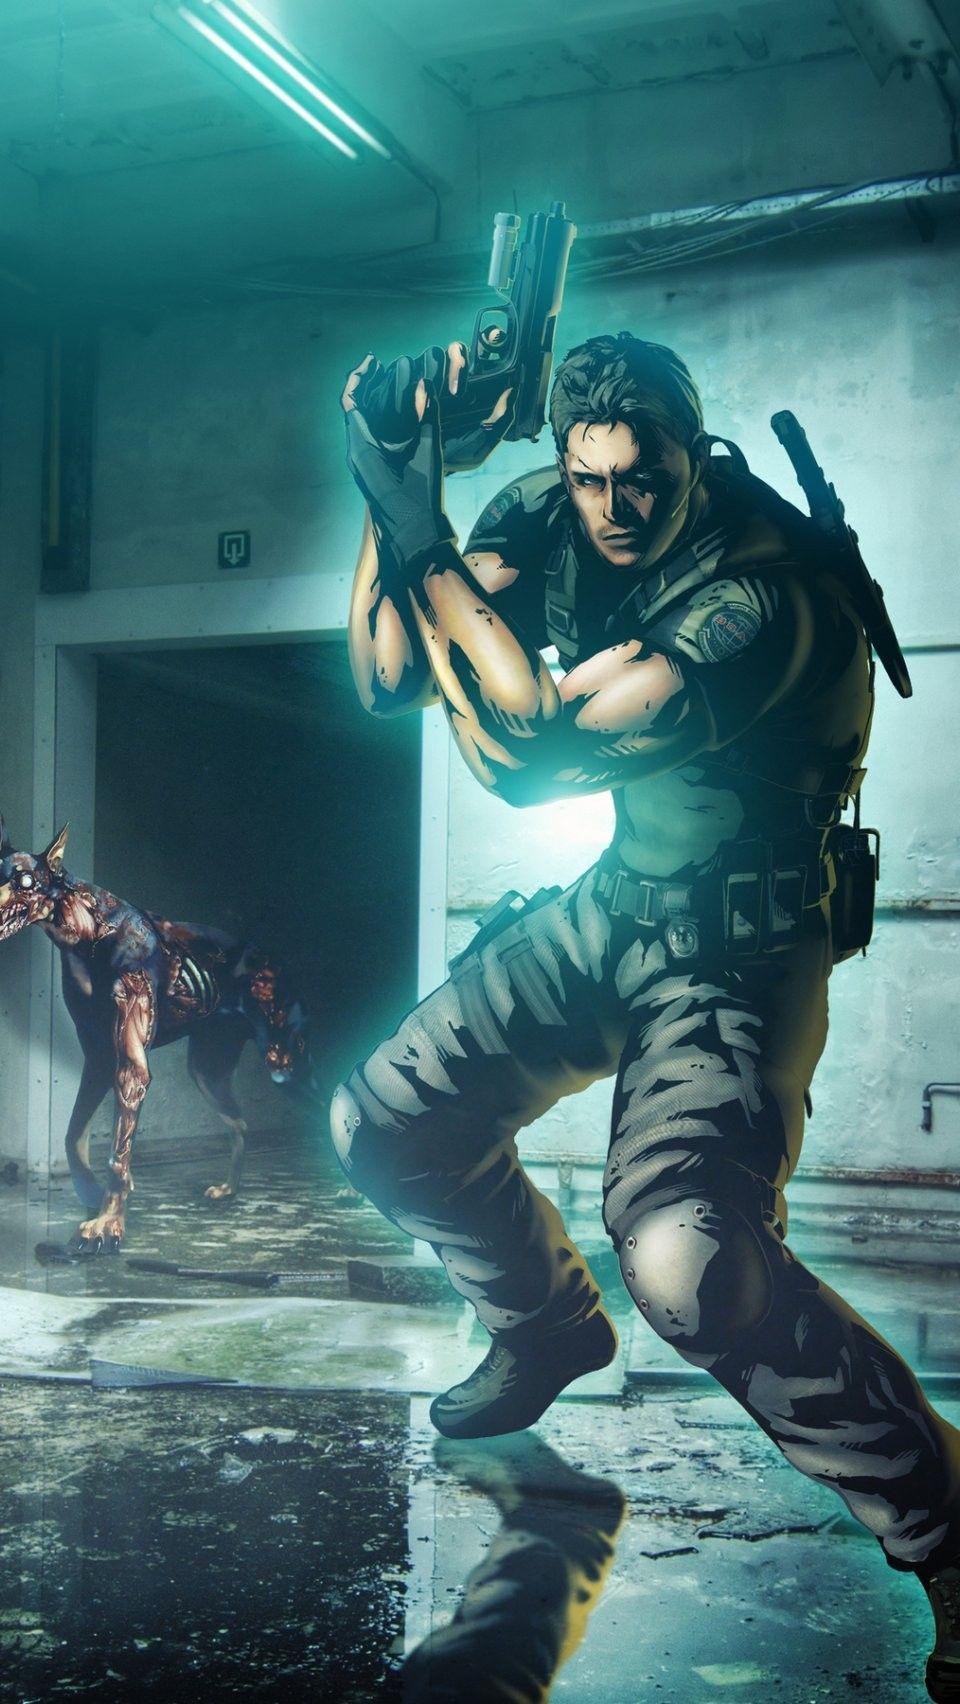 Chris Redfield Marvel vs Capcom 3 iPhone 6 wallpaper